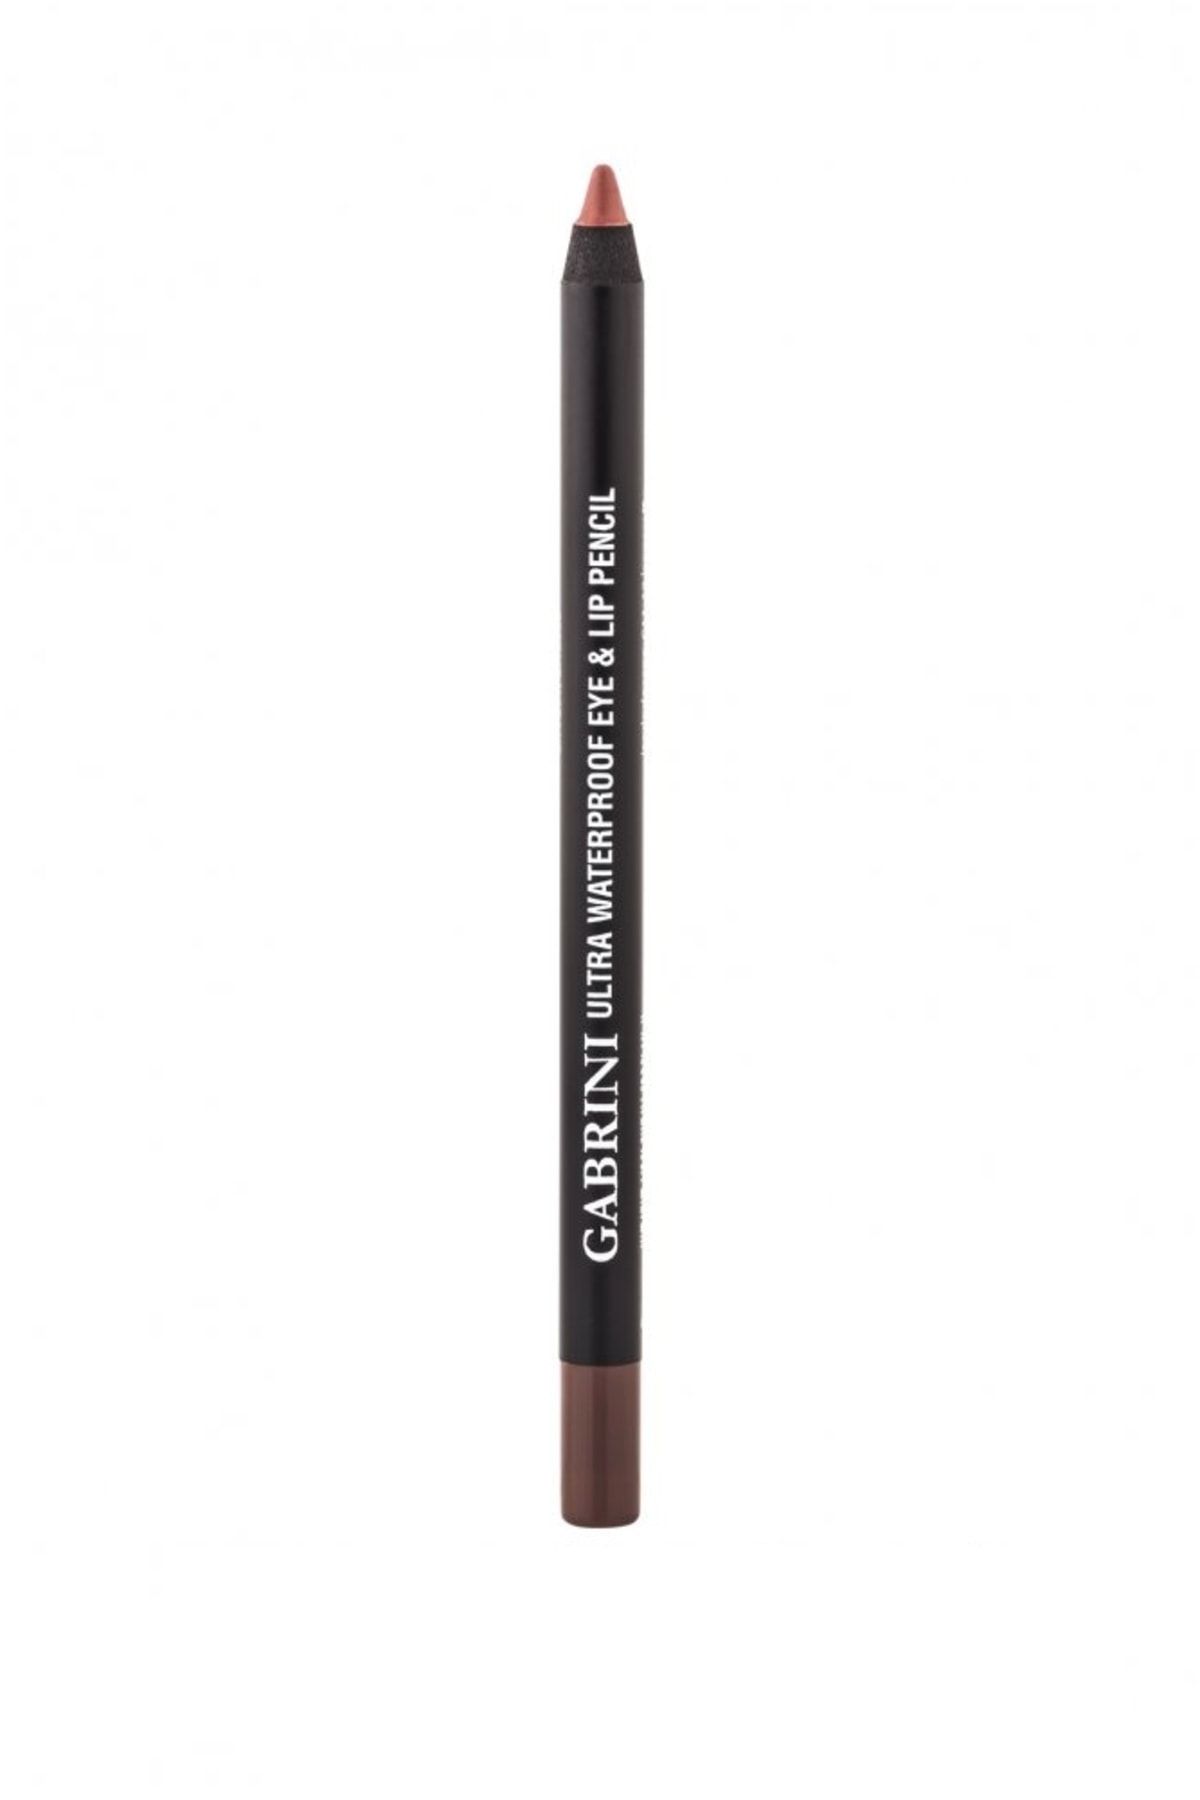 Gabrini Ultra Waterproof Eye & Lip Pencil 17